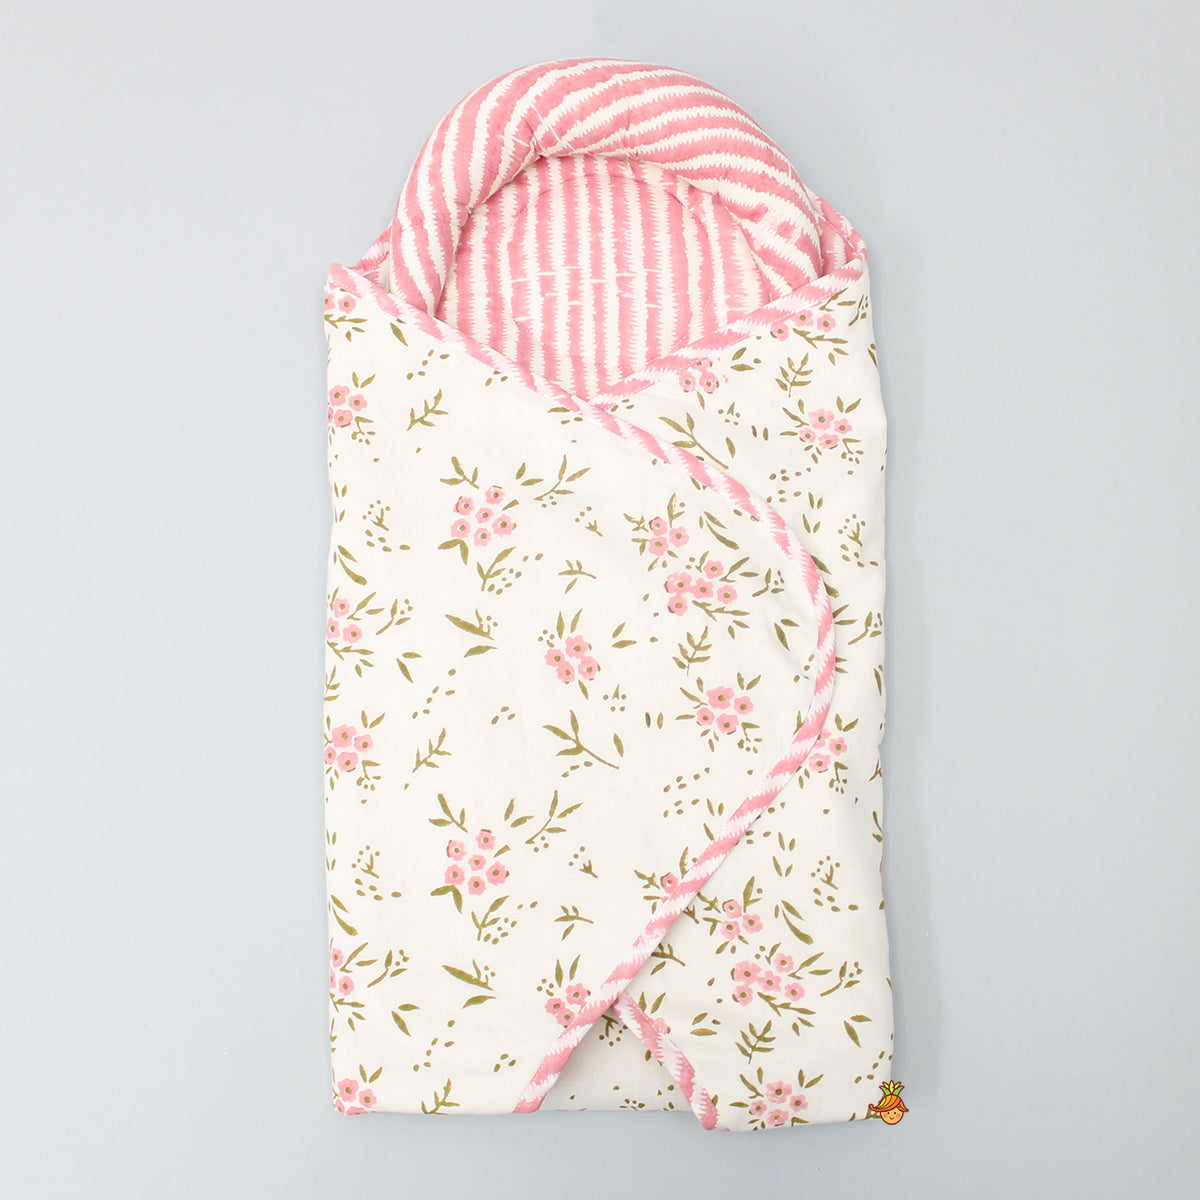 Kite Shaped Wildflowers Printed Pink Baby Wrap